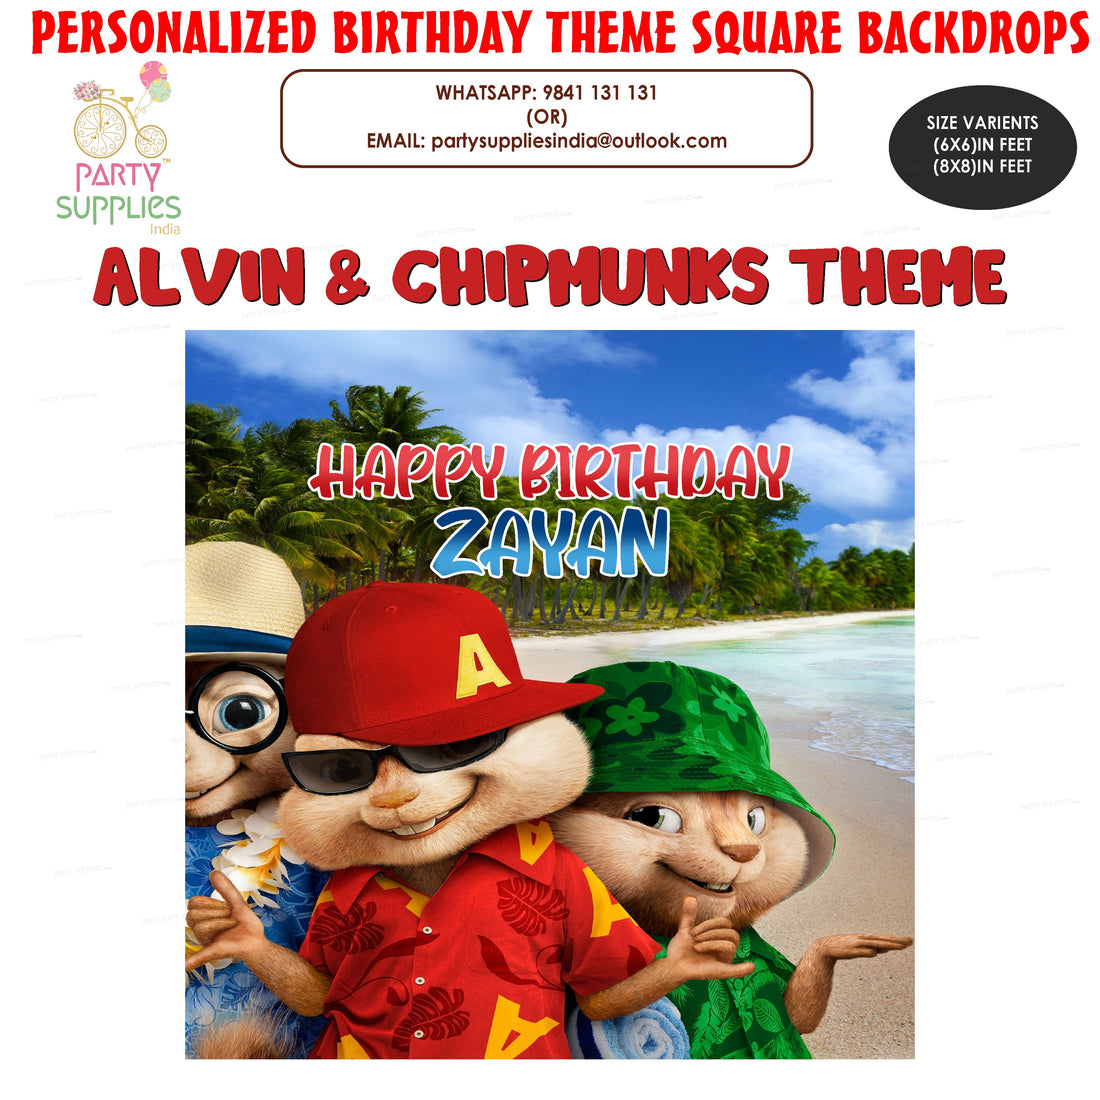 PSI Alvin and Chipmunks Theme Customized Square Backdrop